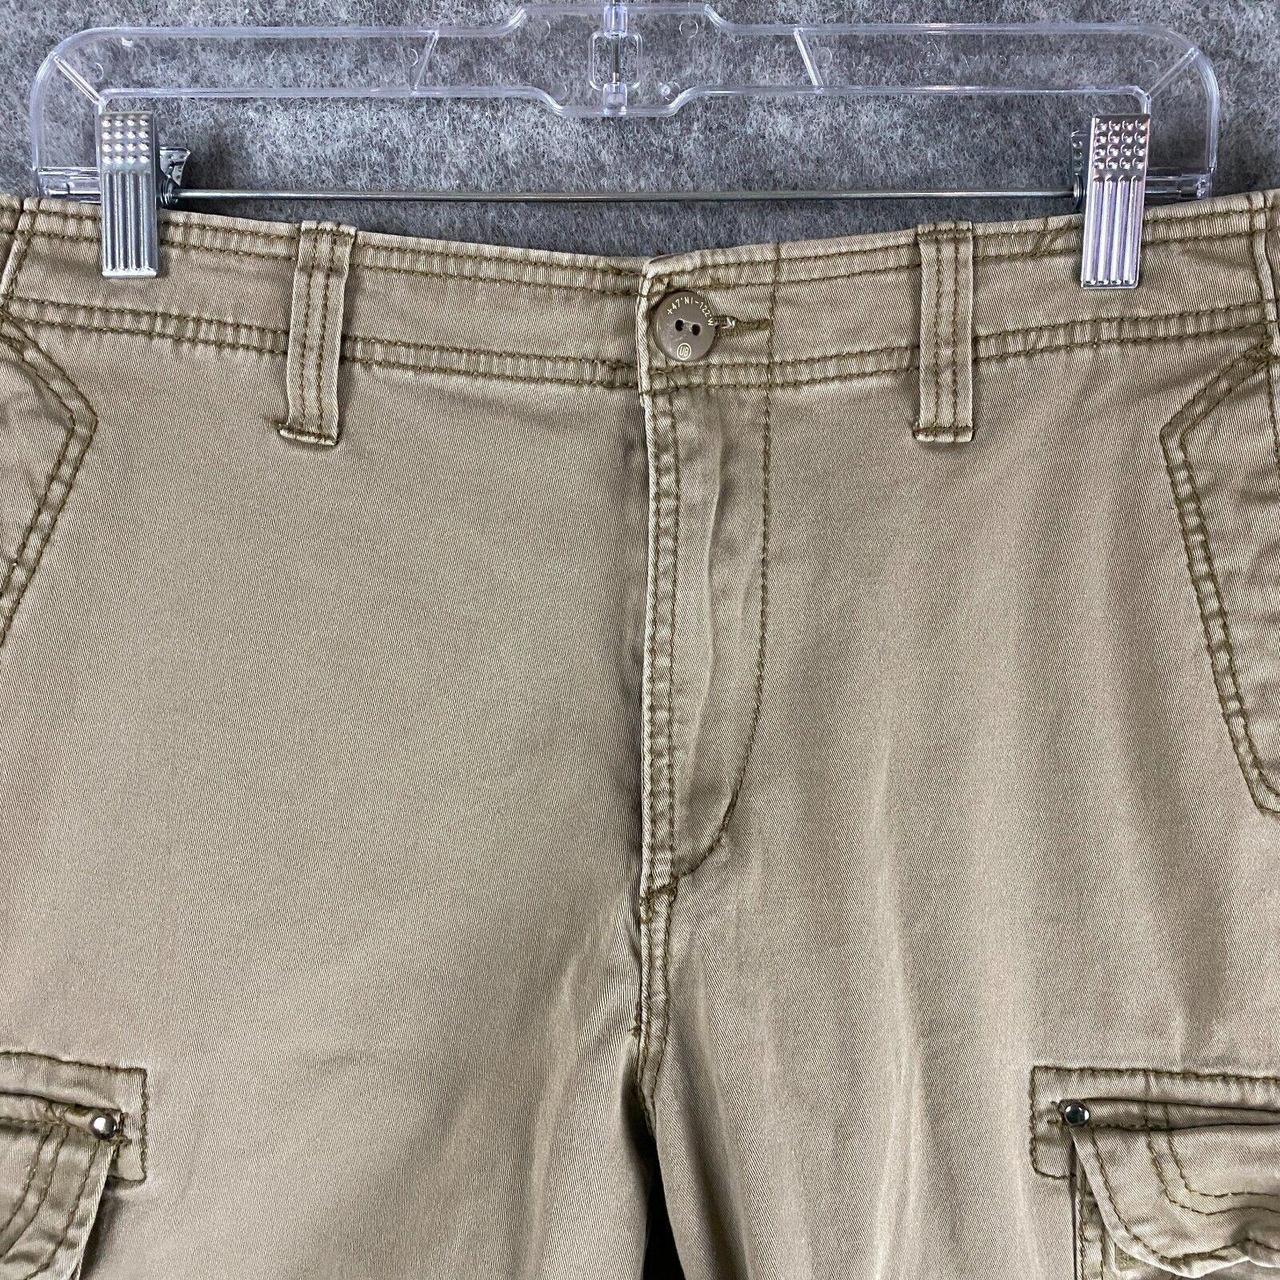 Union Bay Men's Tan Shorts (2)